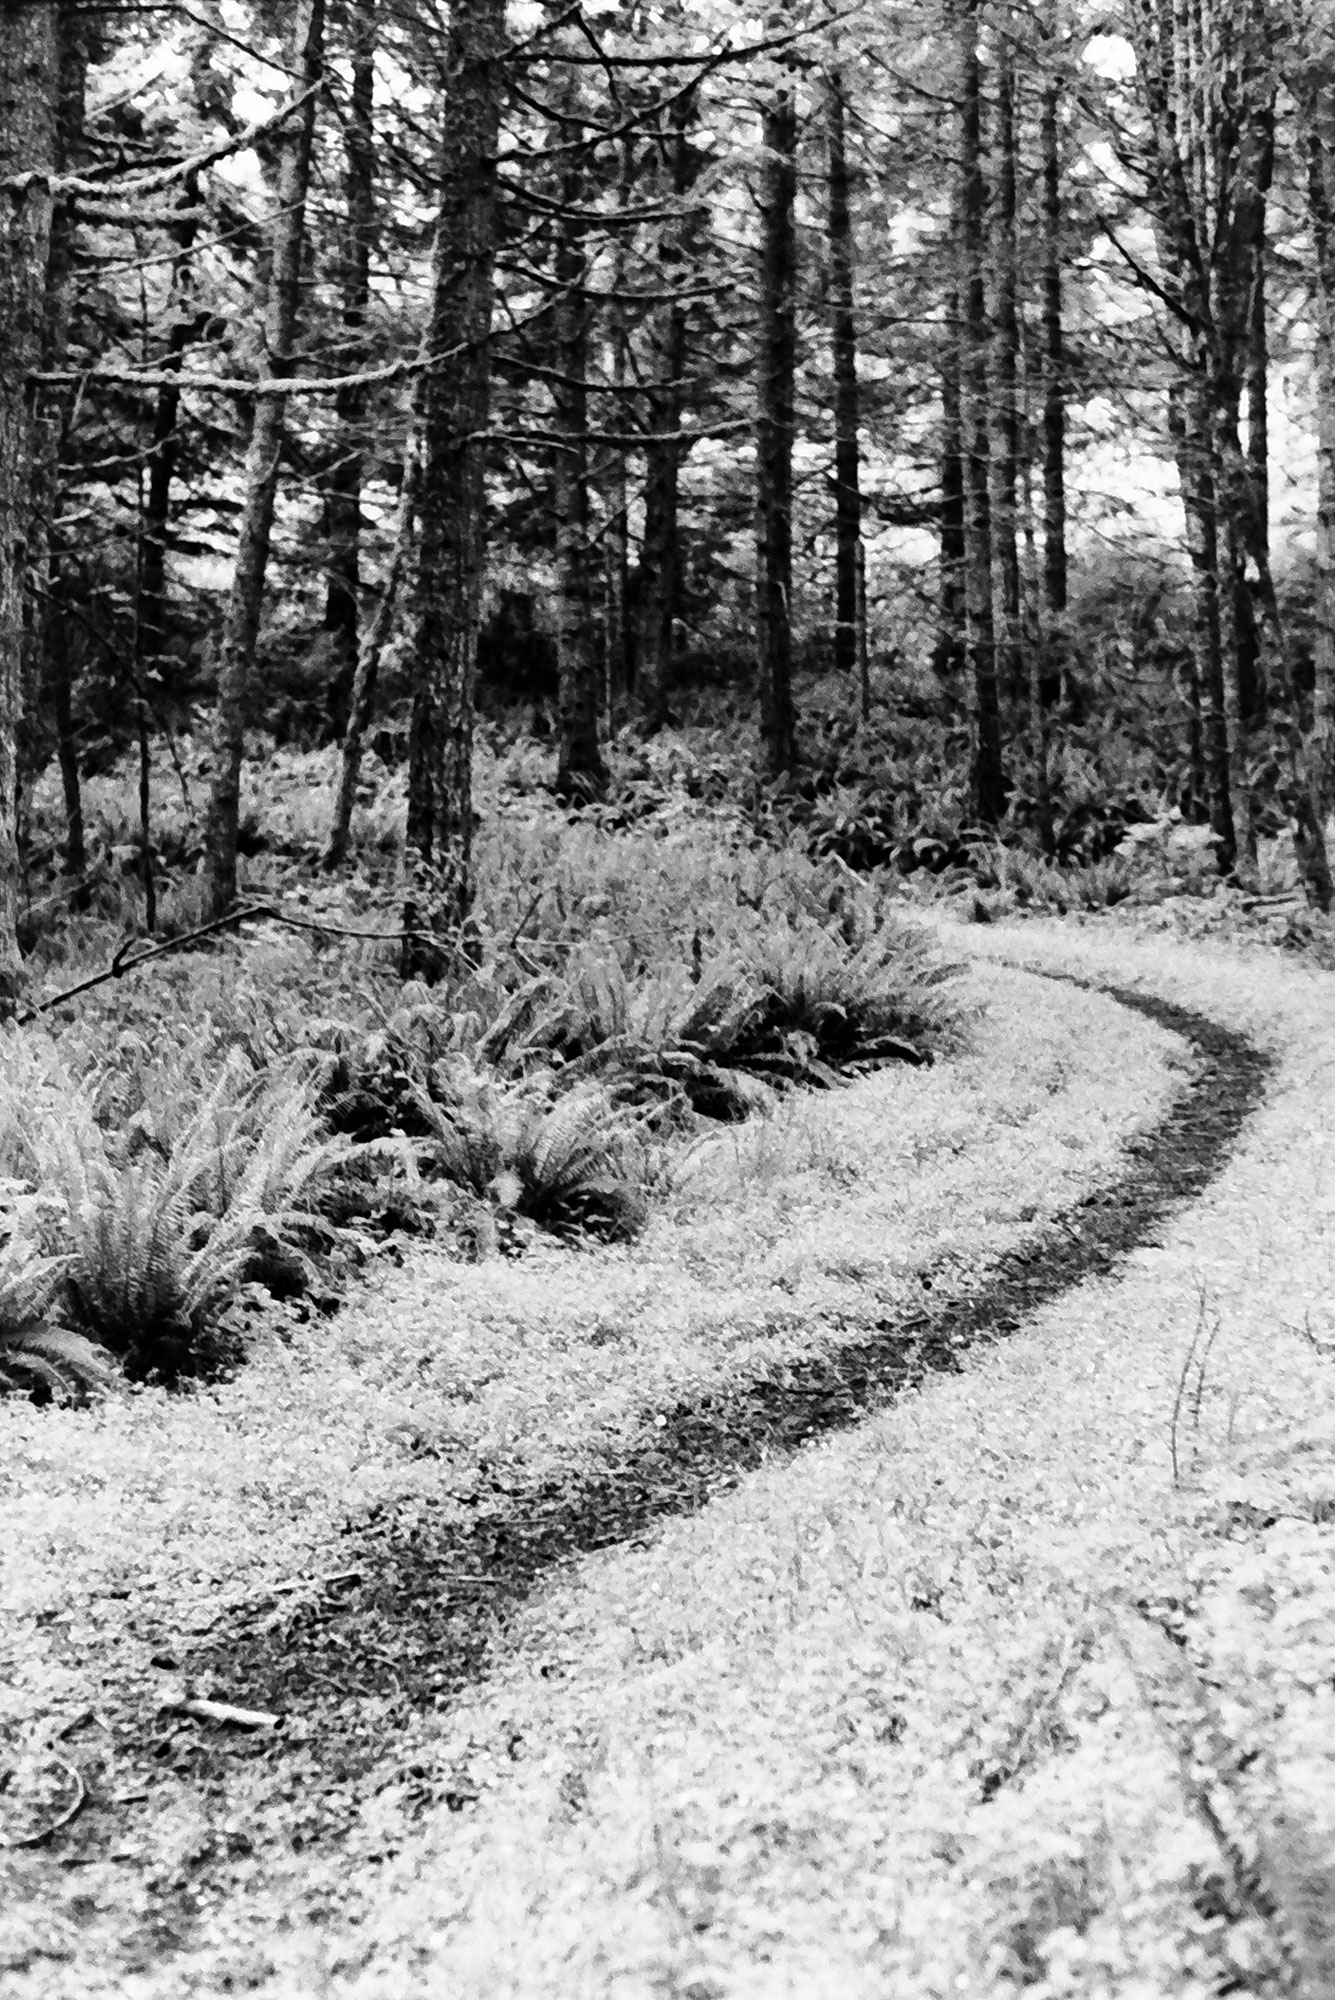 A forest path winds its way through fir trees